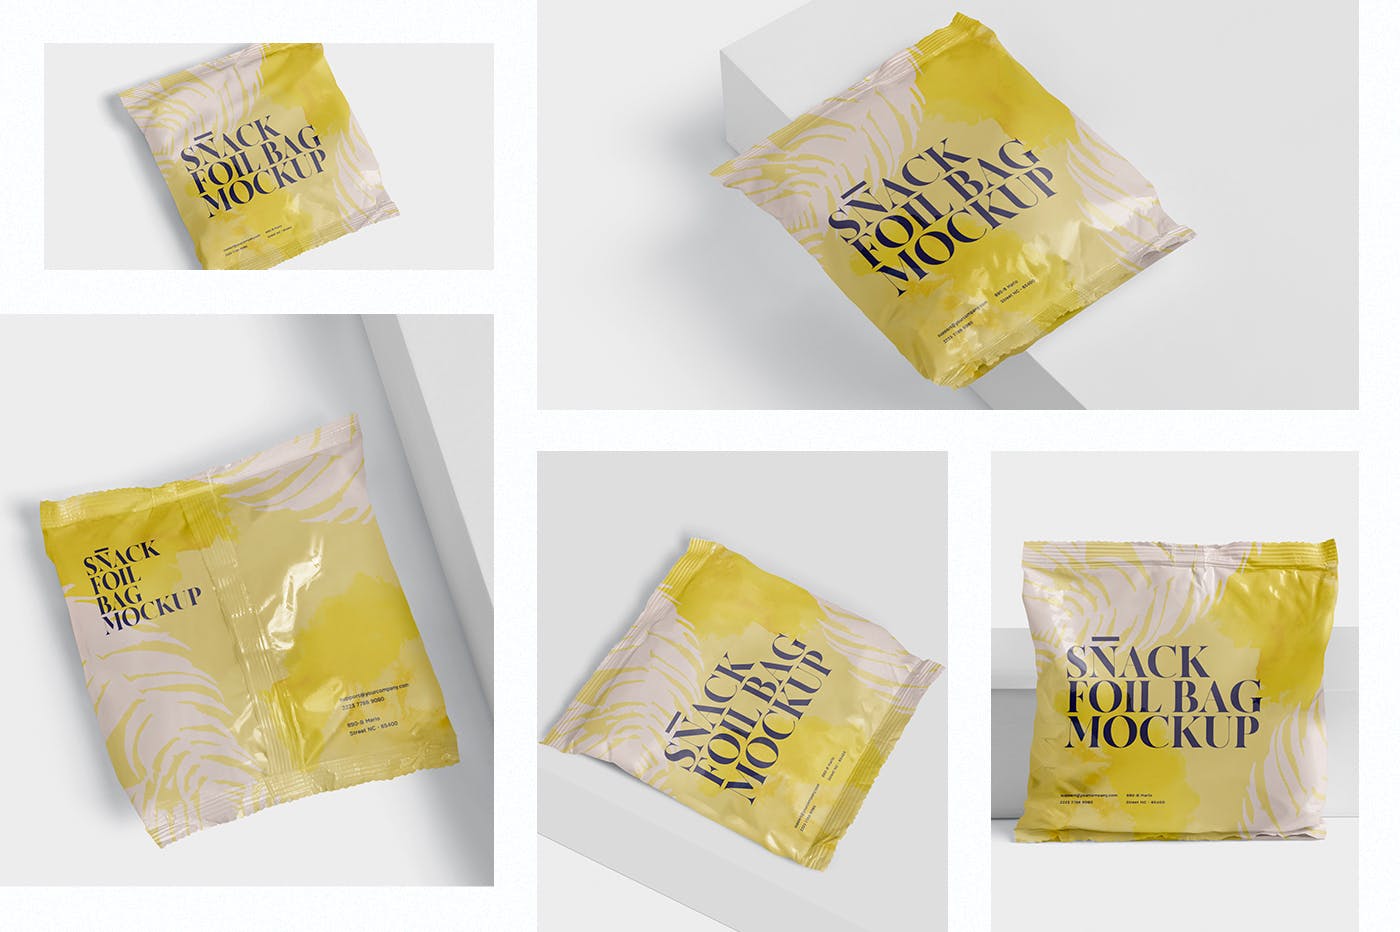 小吃零食铝箔包装袋设计图素材中国精选 Snack Foil Bag Mockup – Square Size – Small插图(1)